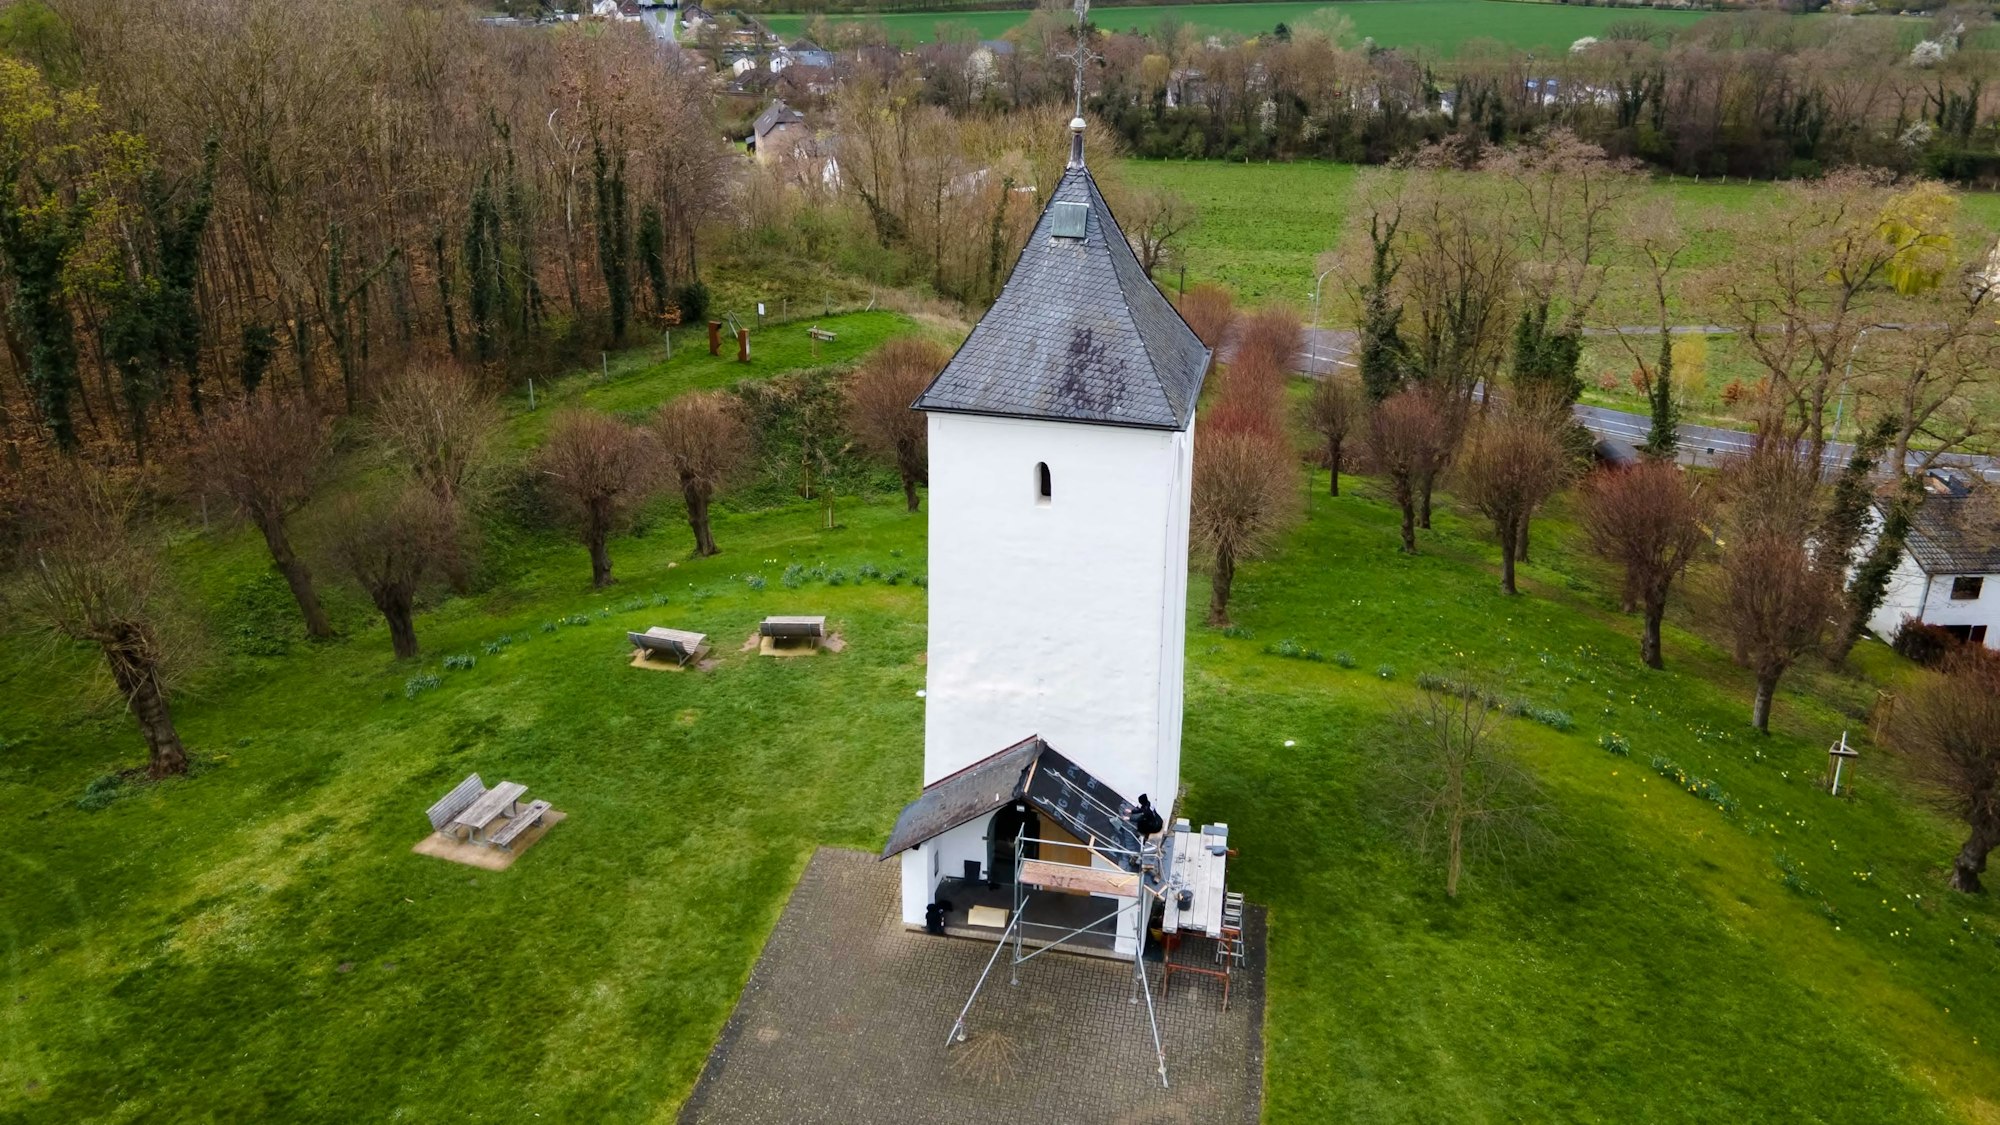 Der Swister Turm in Weilerswist.